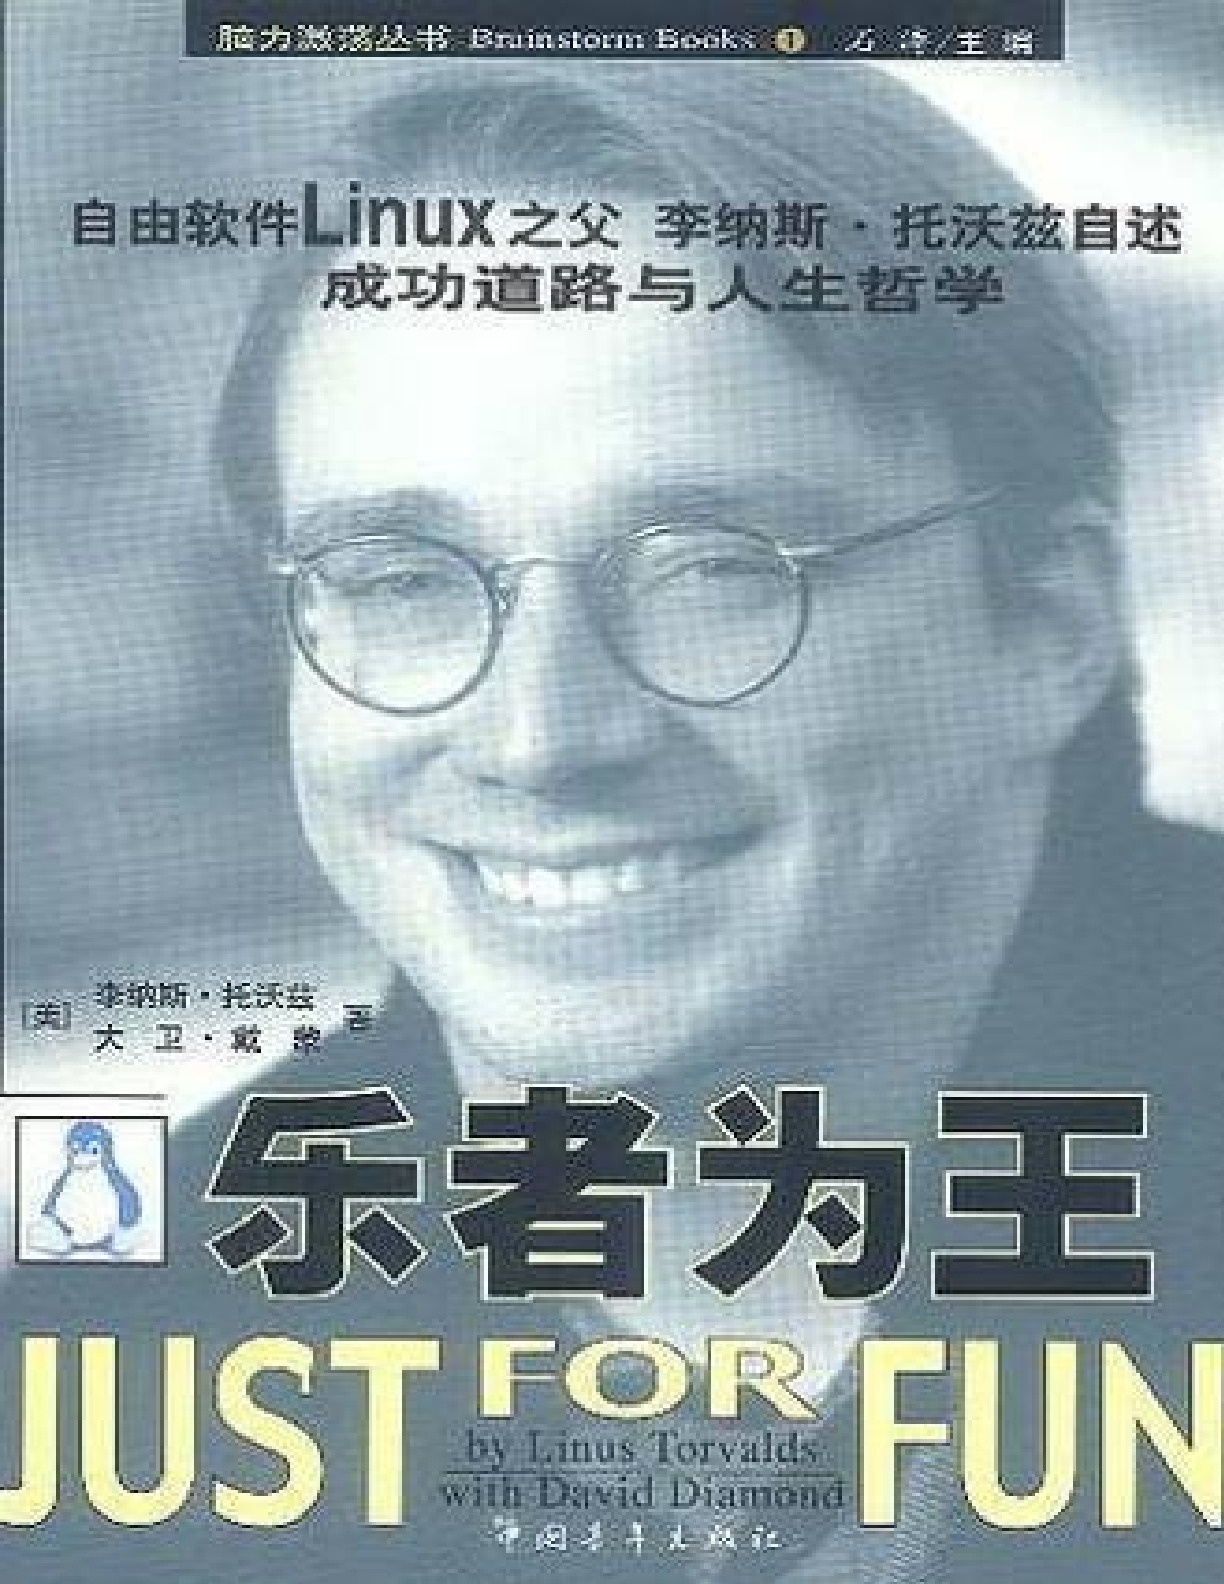 乐者为王 – Linus Torvalds